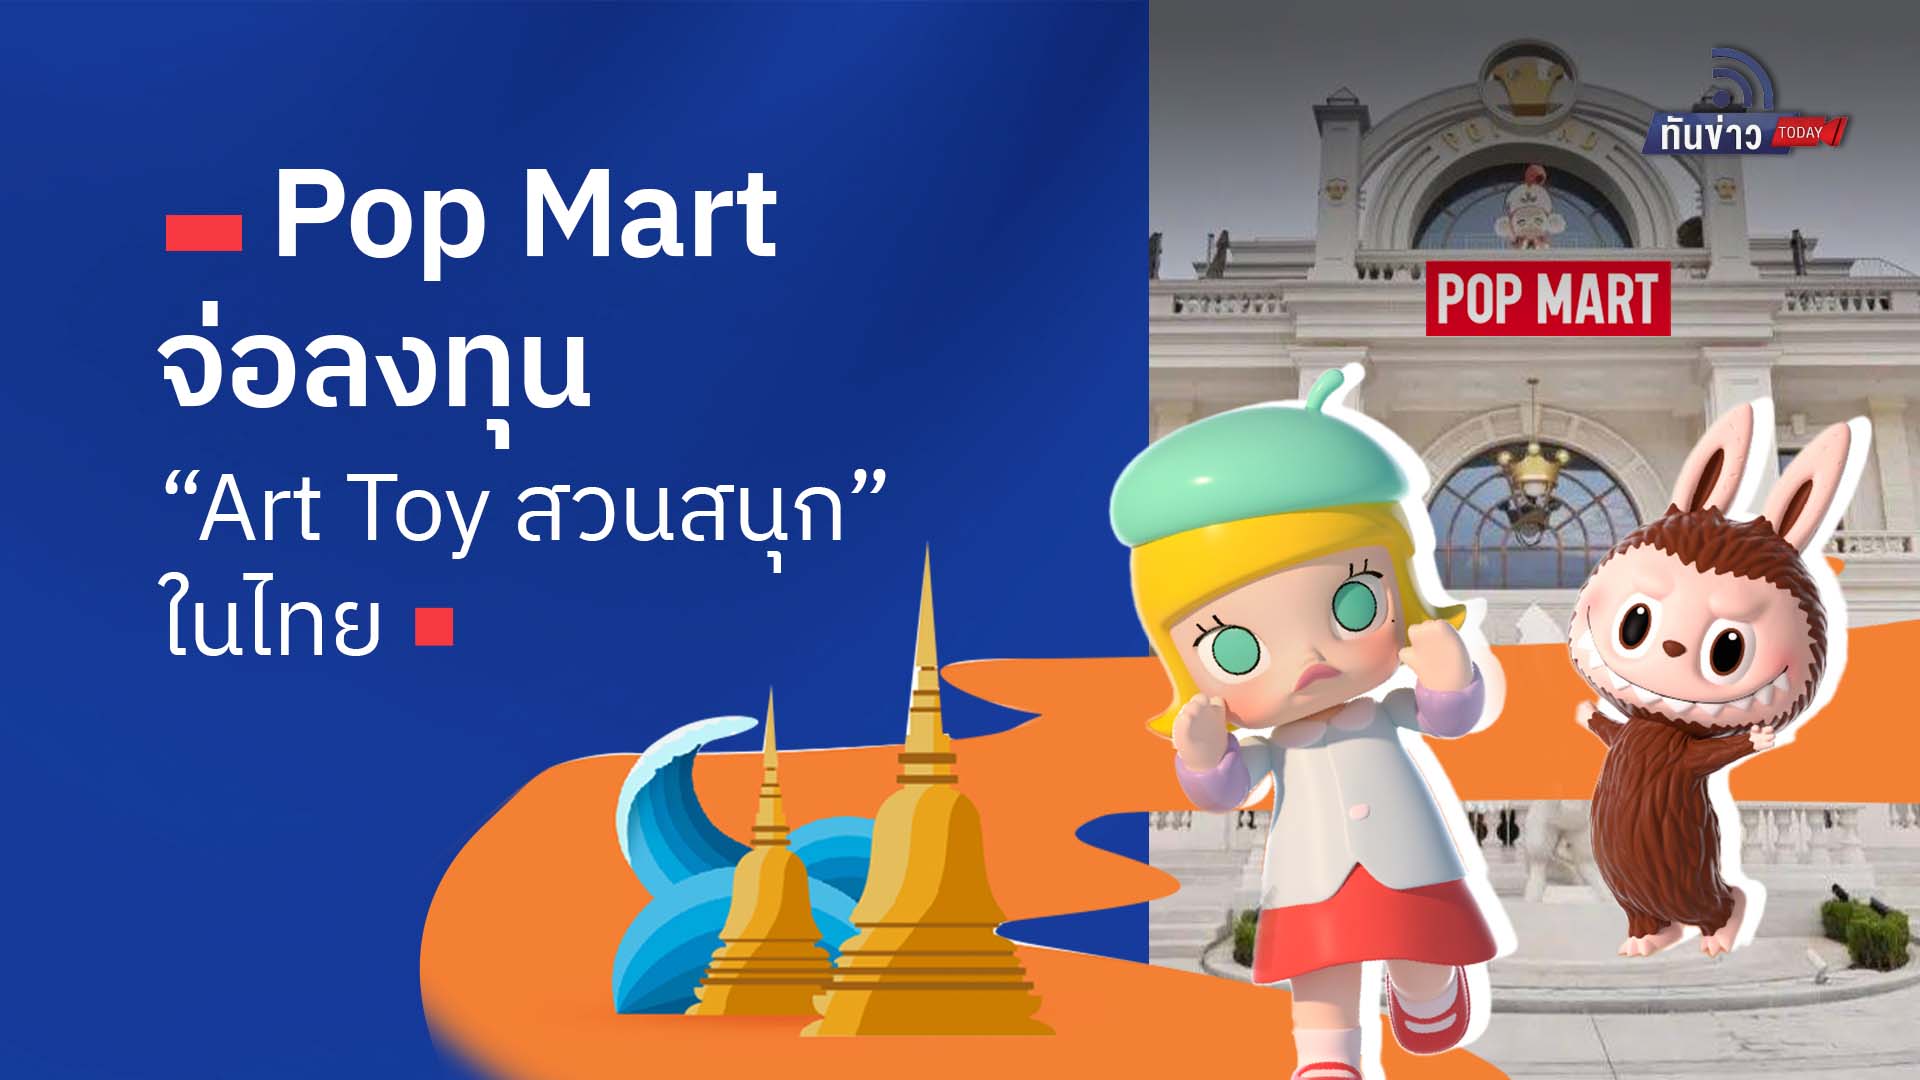 Pop Mart จ่อลงทุน “Art Toy สวนสนุก” ในไทย